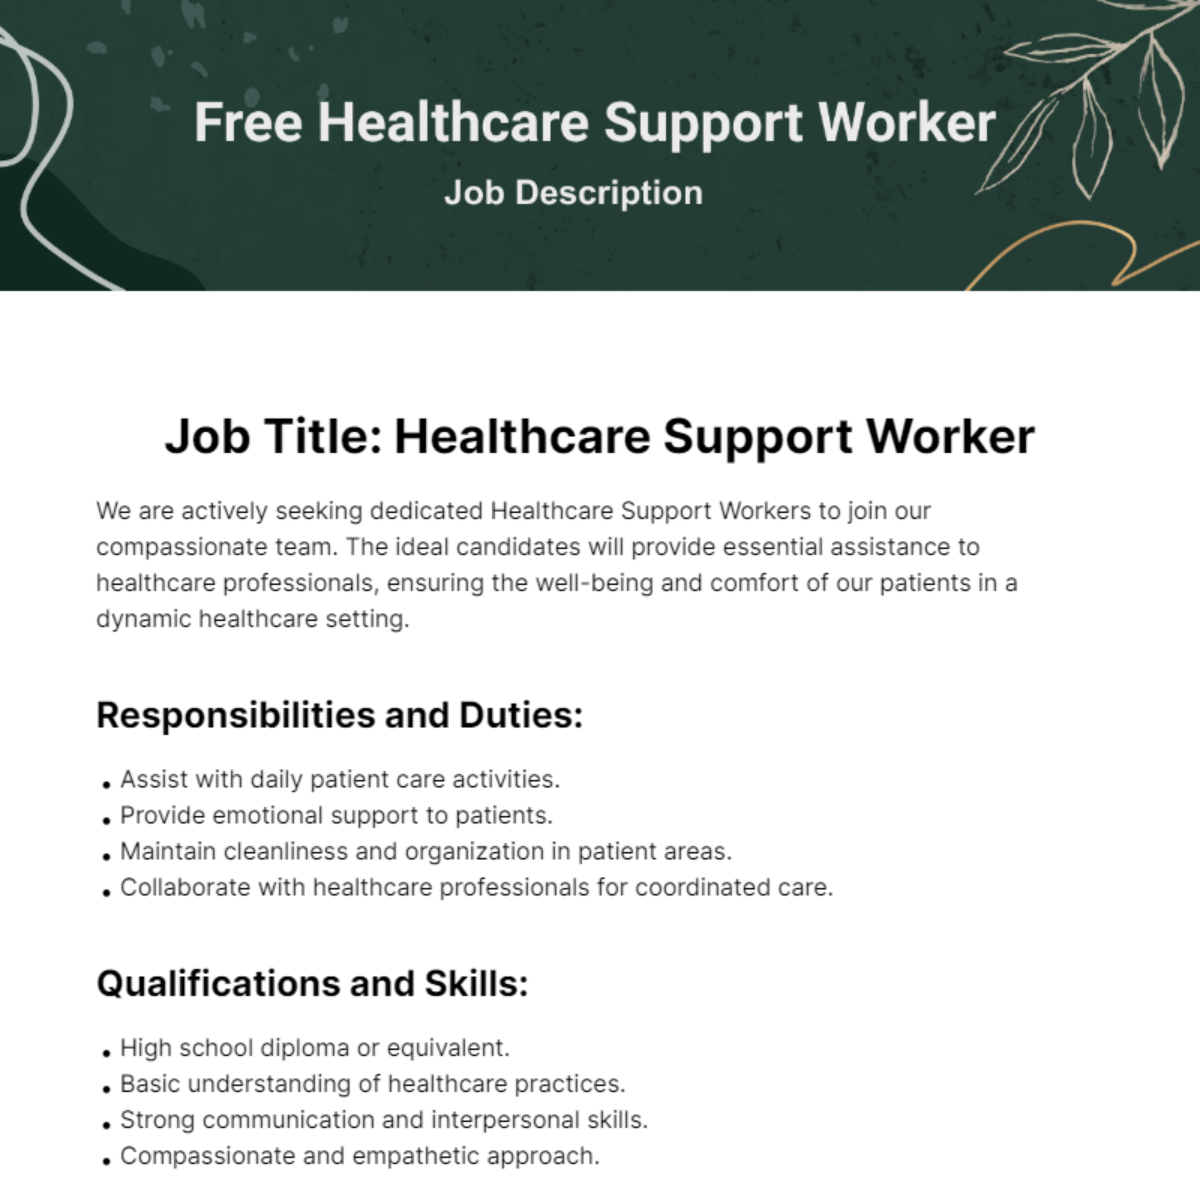 Free Healthcare Support Worker Job Description Template